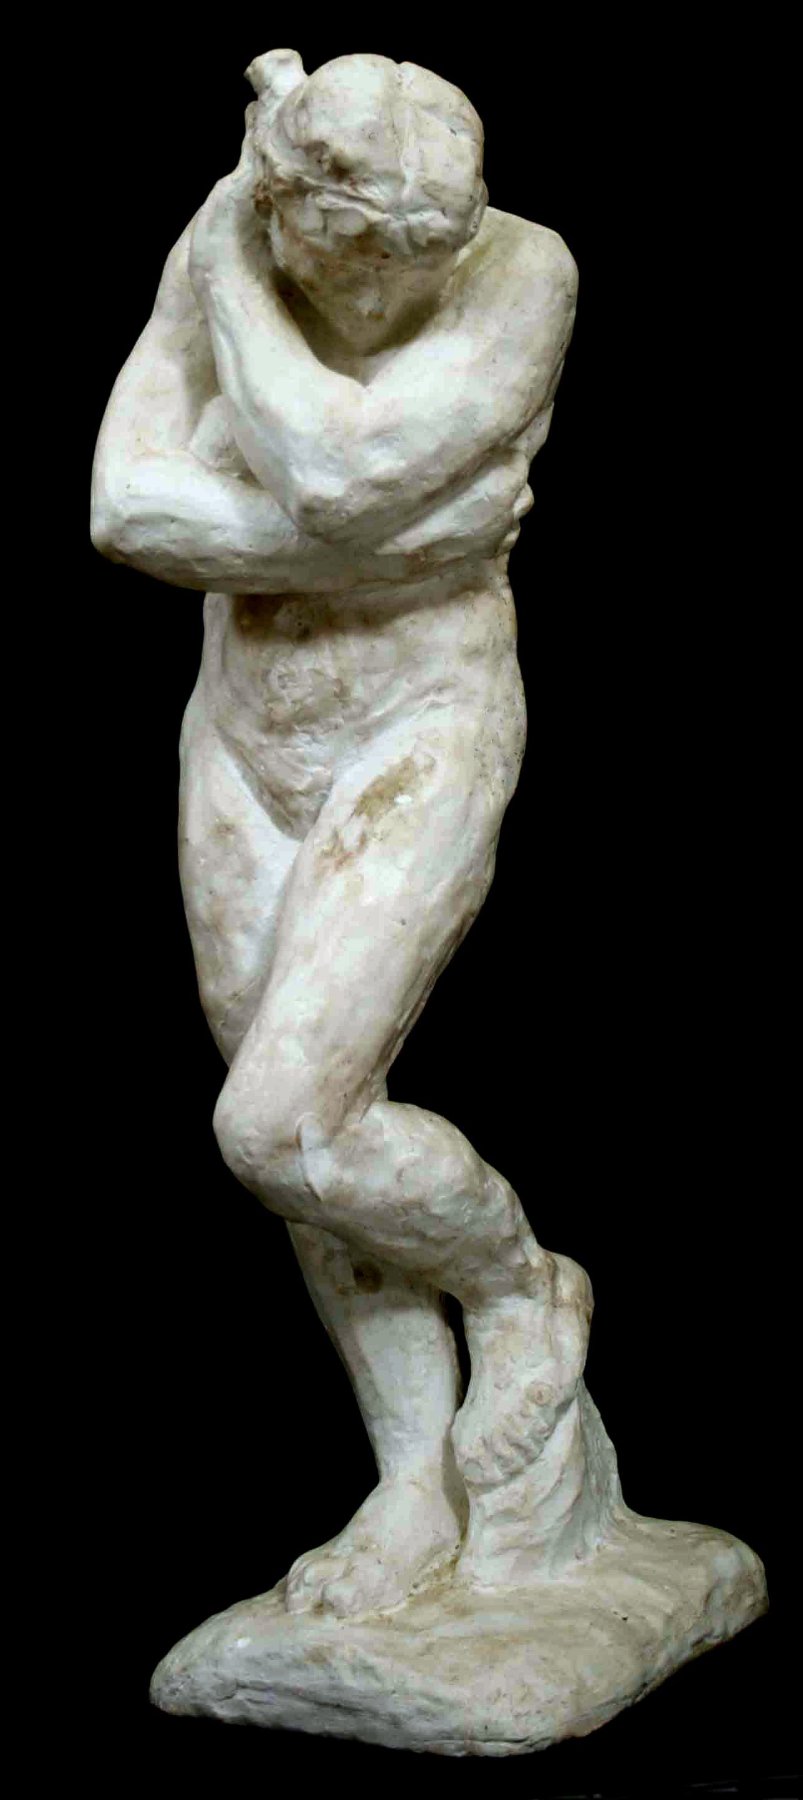 photo of antique plaster cast sculpture of nude female figure hugging herself against black background